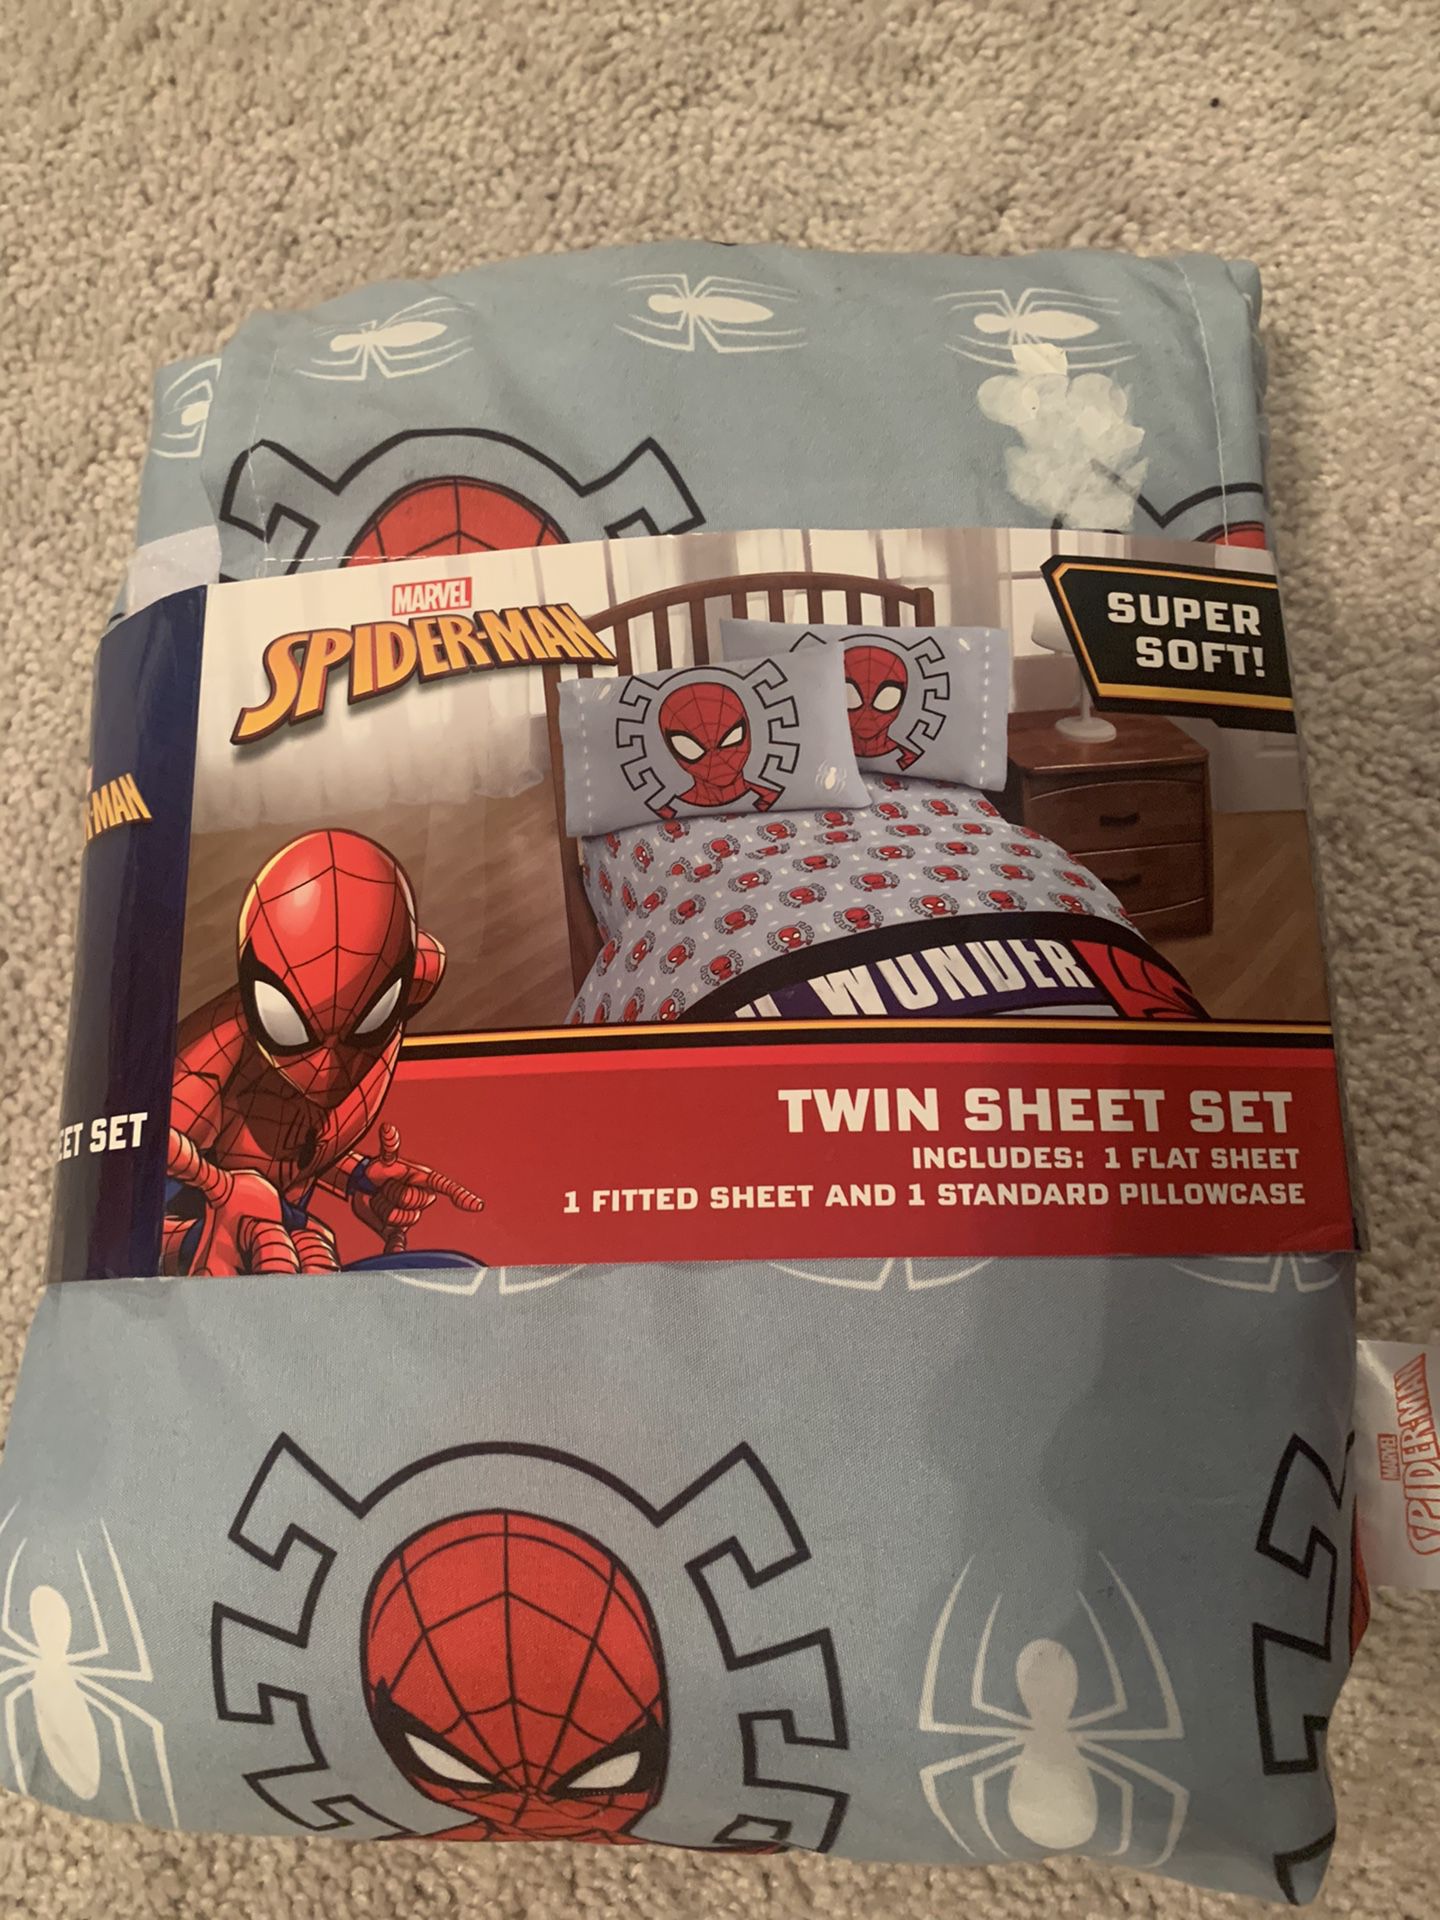 Brand new Spider-Man twin sheet set